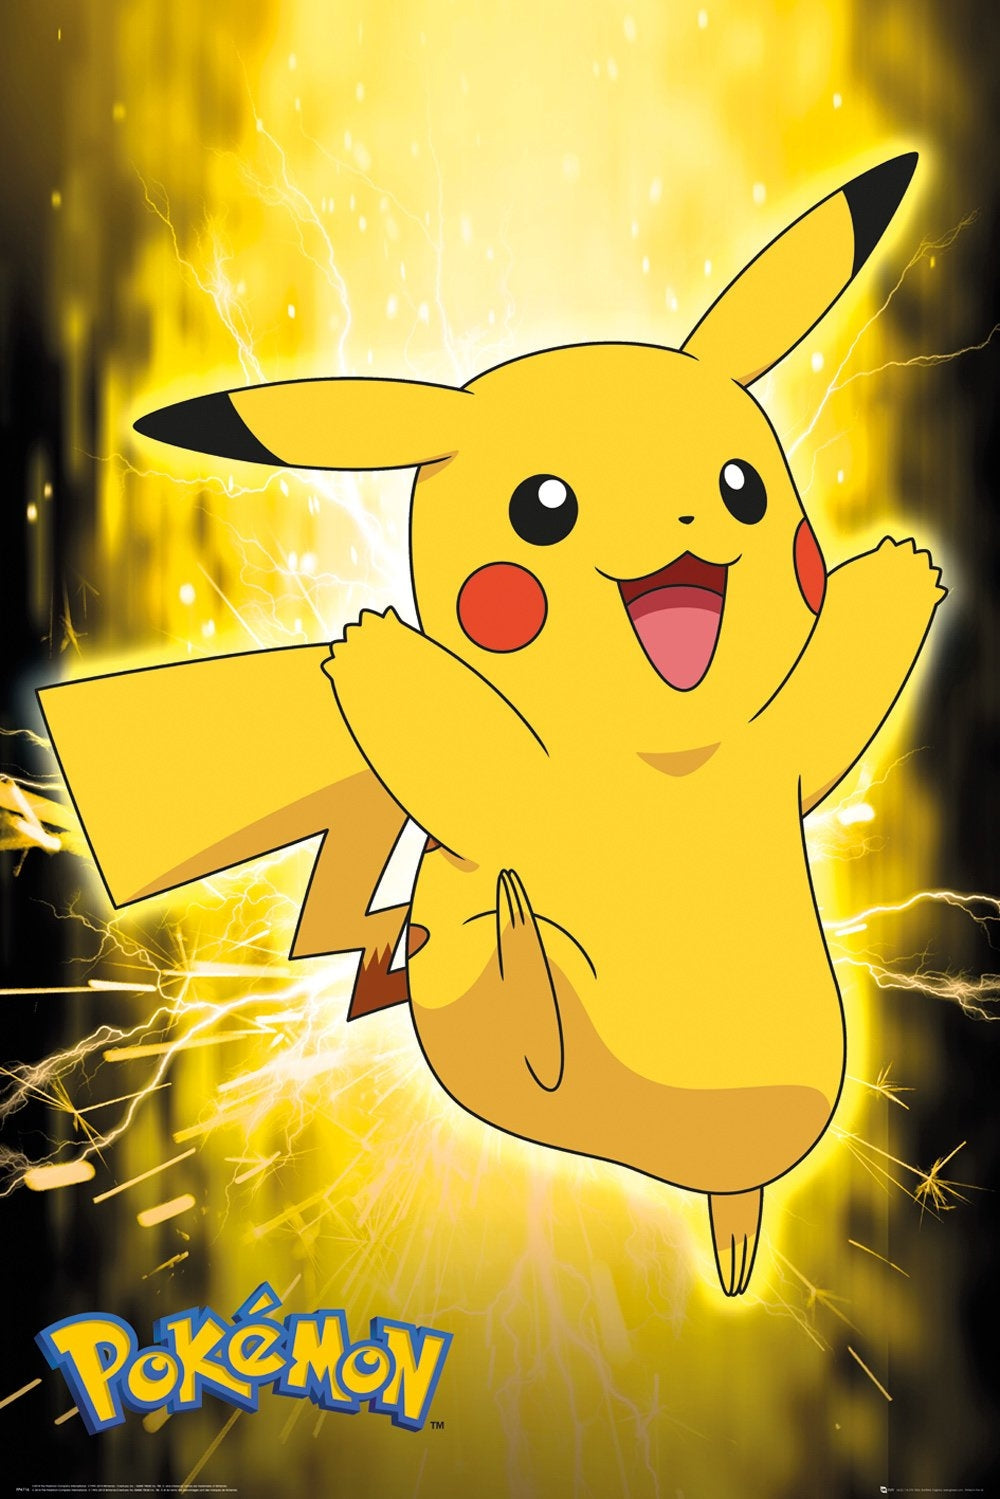 Pokemon (Pikachu Neon) Poster